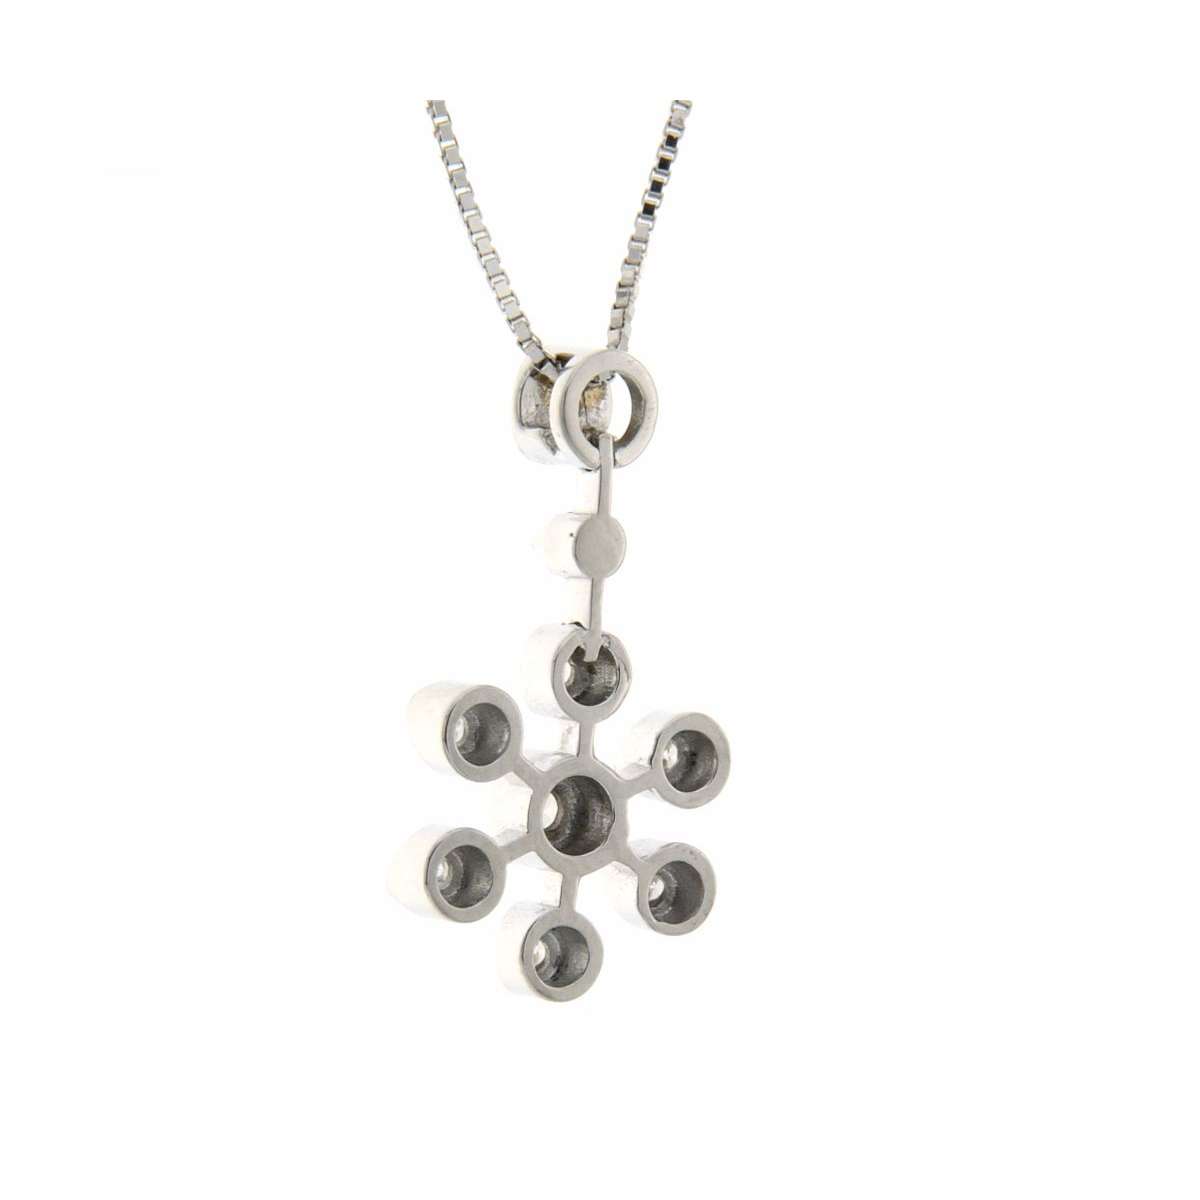 Flower design necklace 0.24 carats diamonds G-VS1